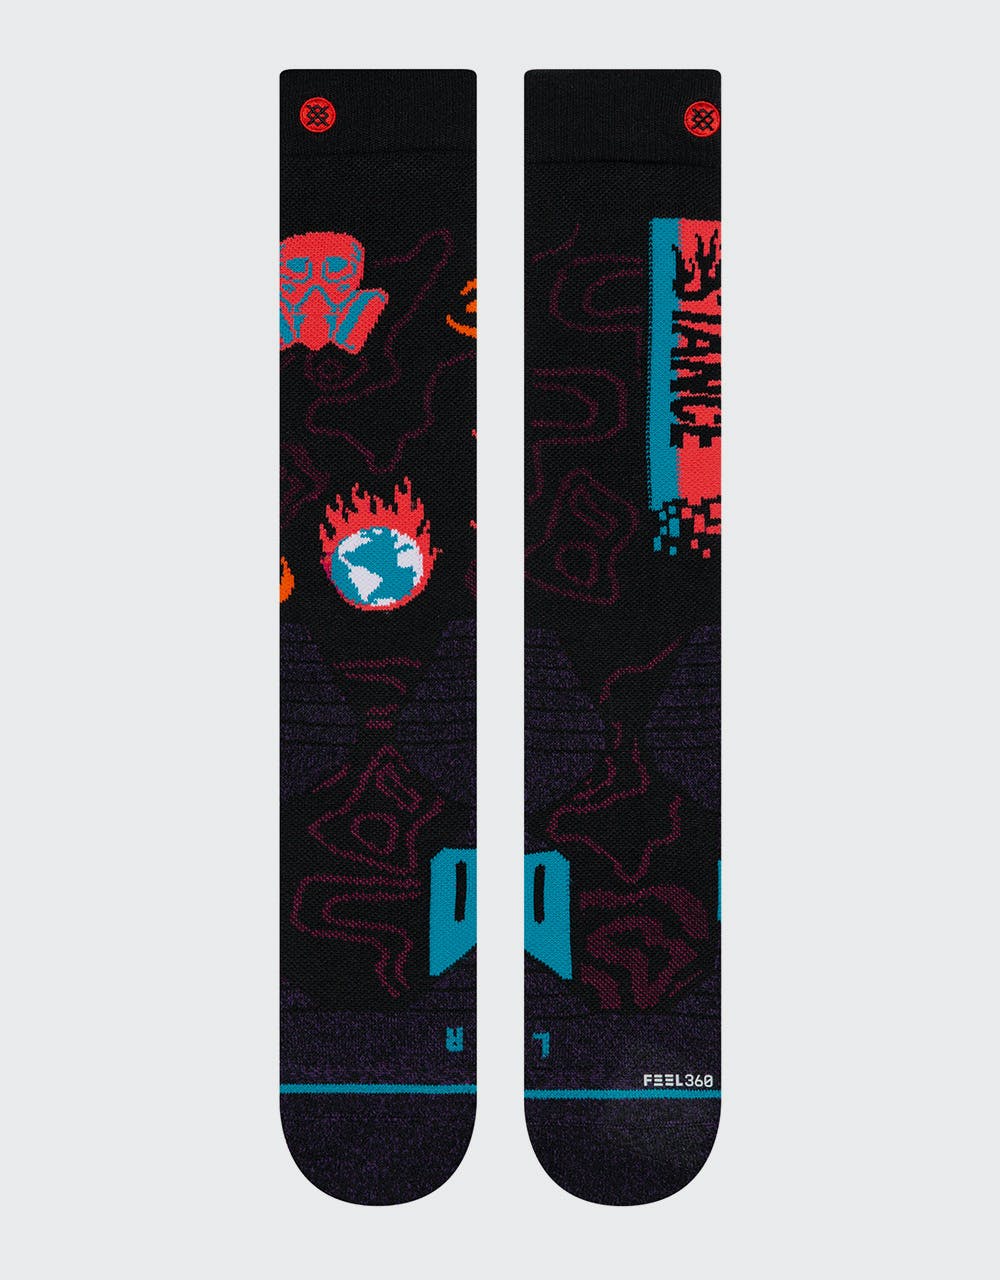 Stance 6999 Kotsenberg Pro Snowboard Socks - Black